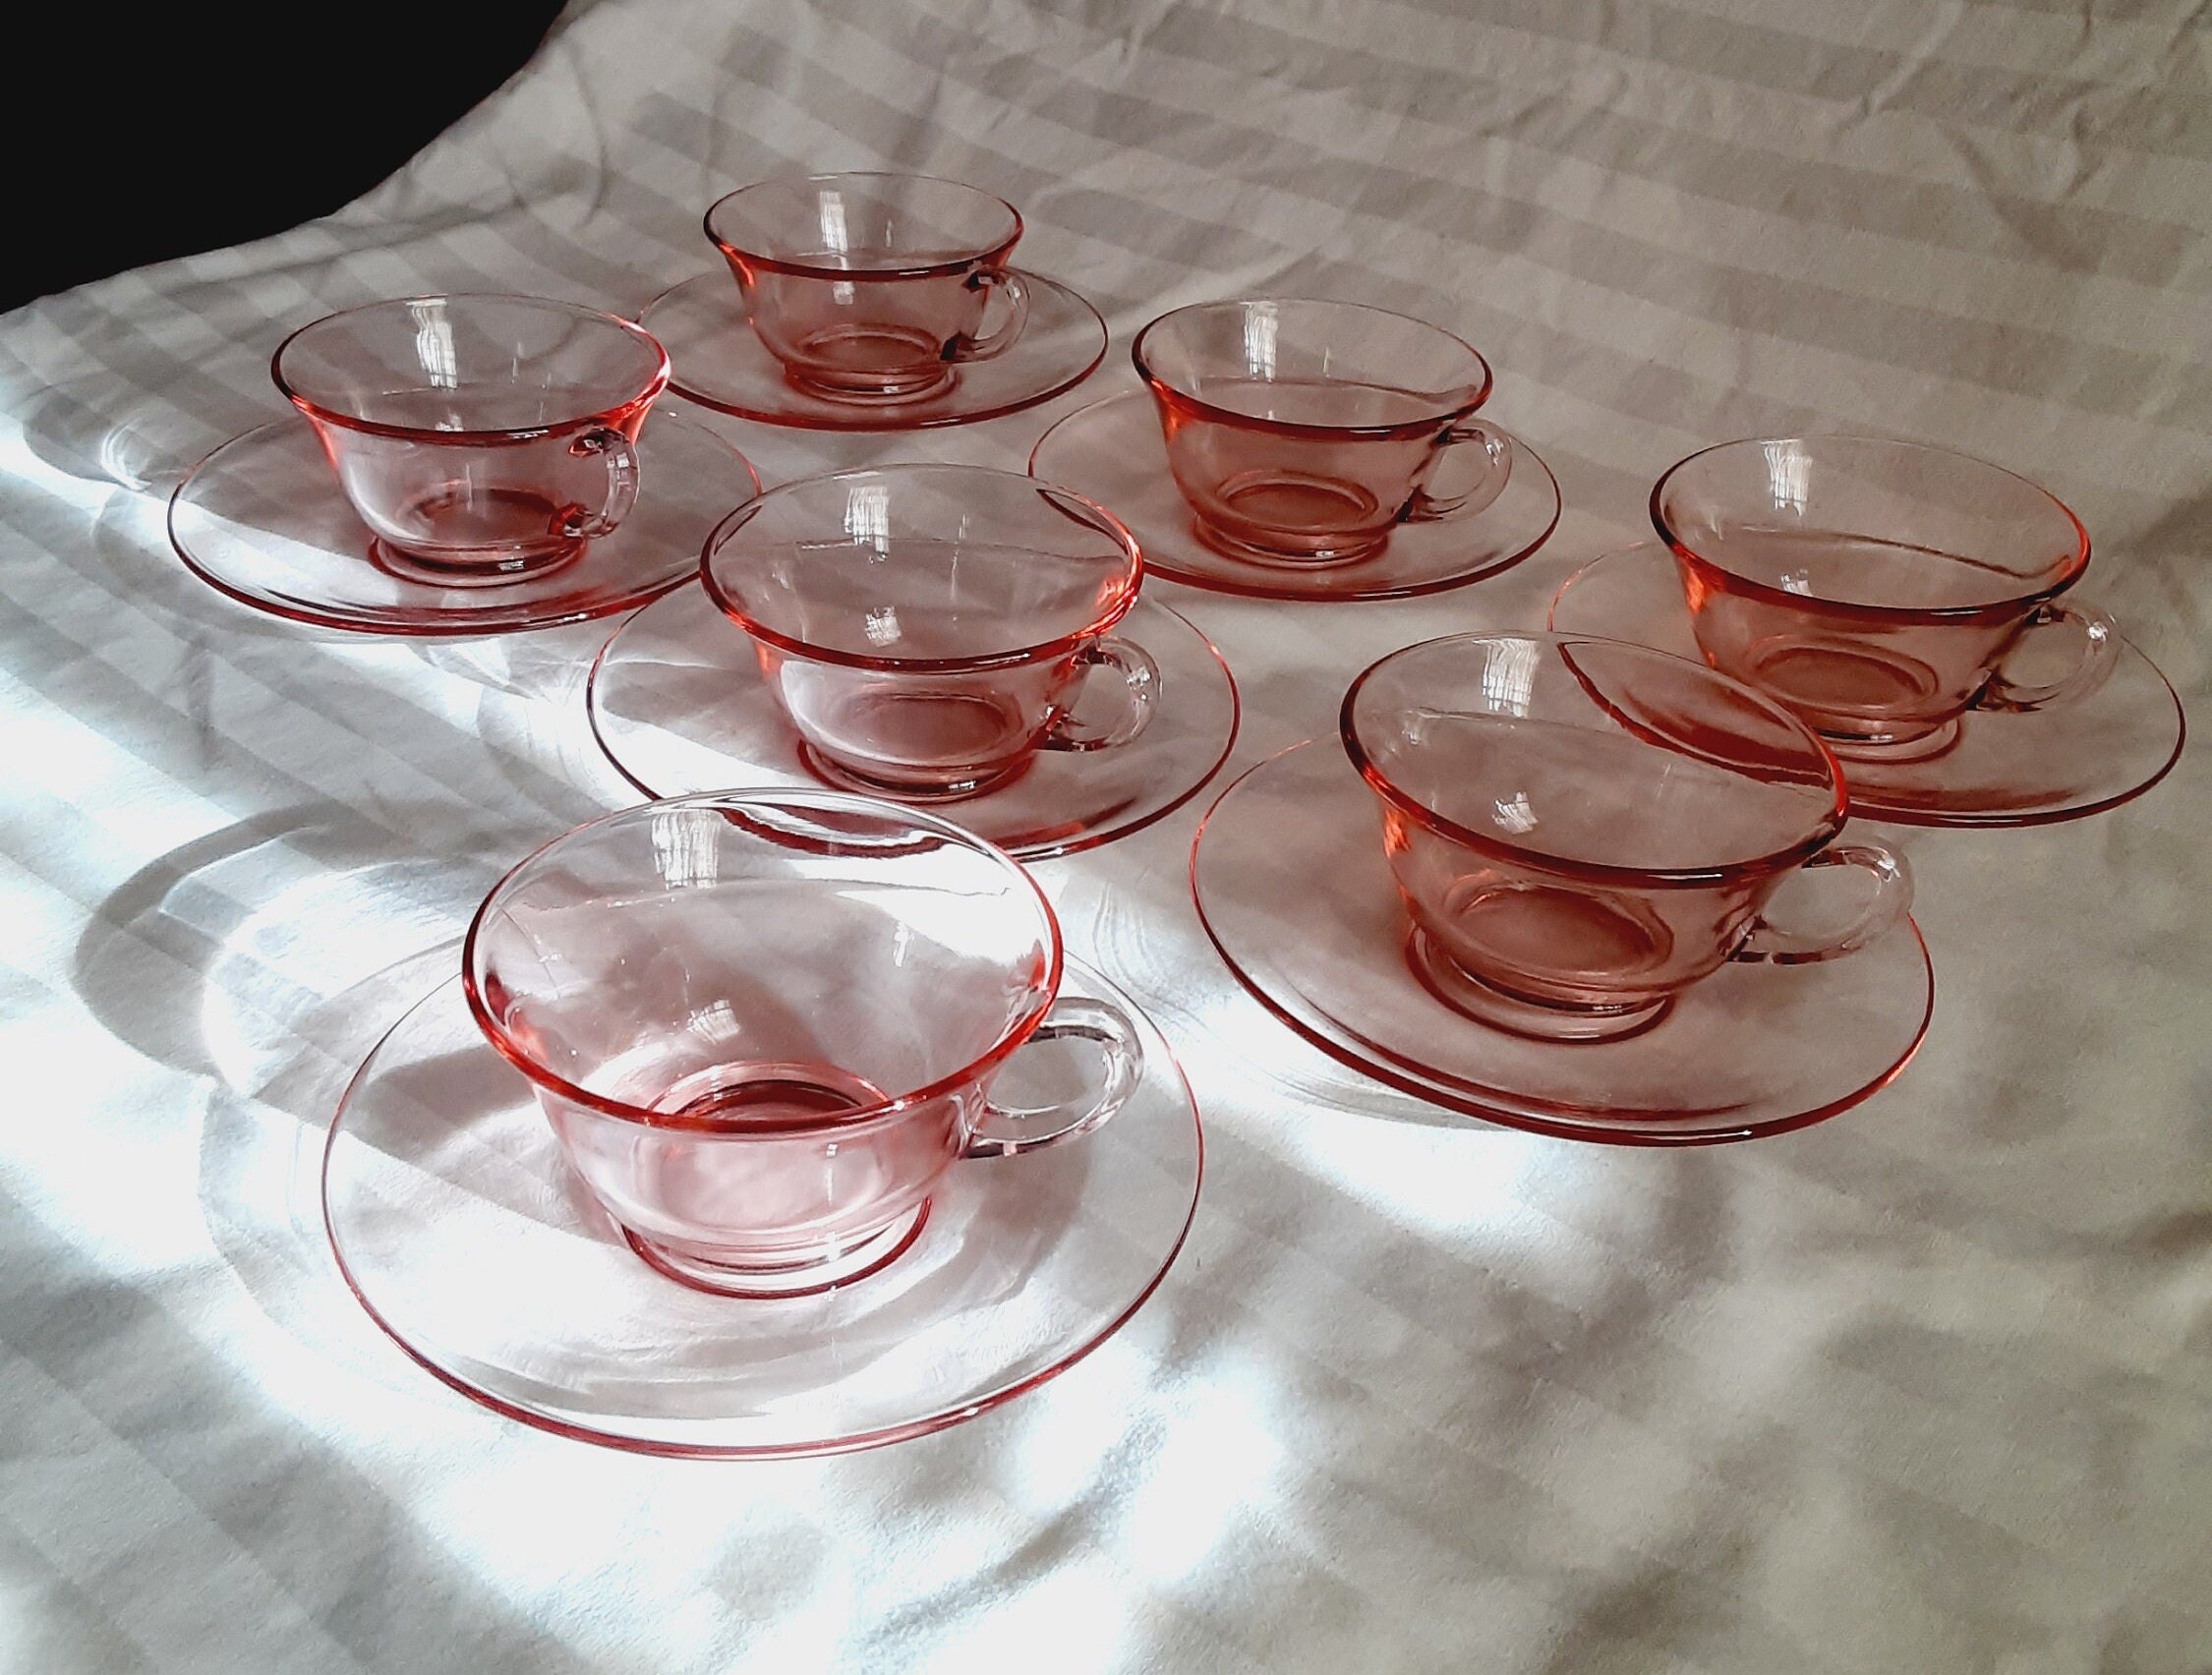 Volarium Glass Tea Cups and Saucers Sets, 6 PCs Clear